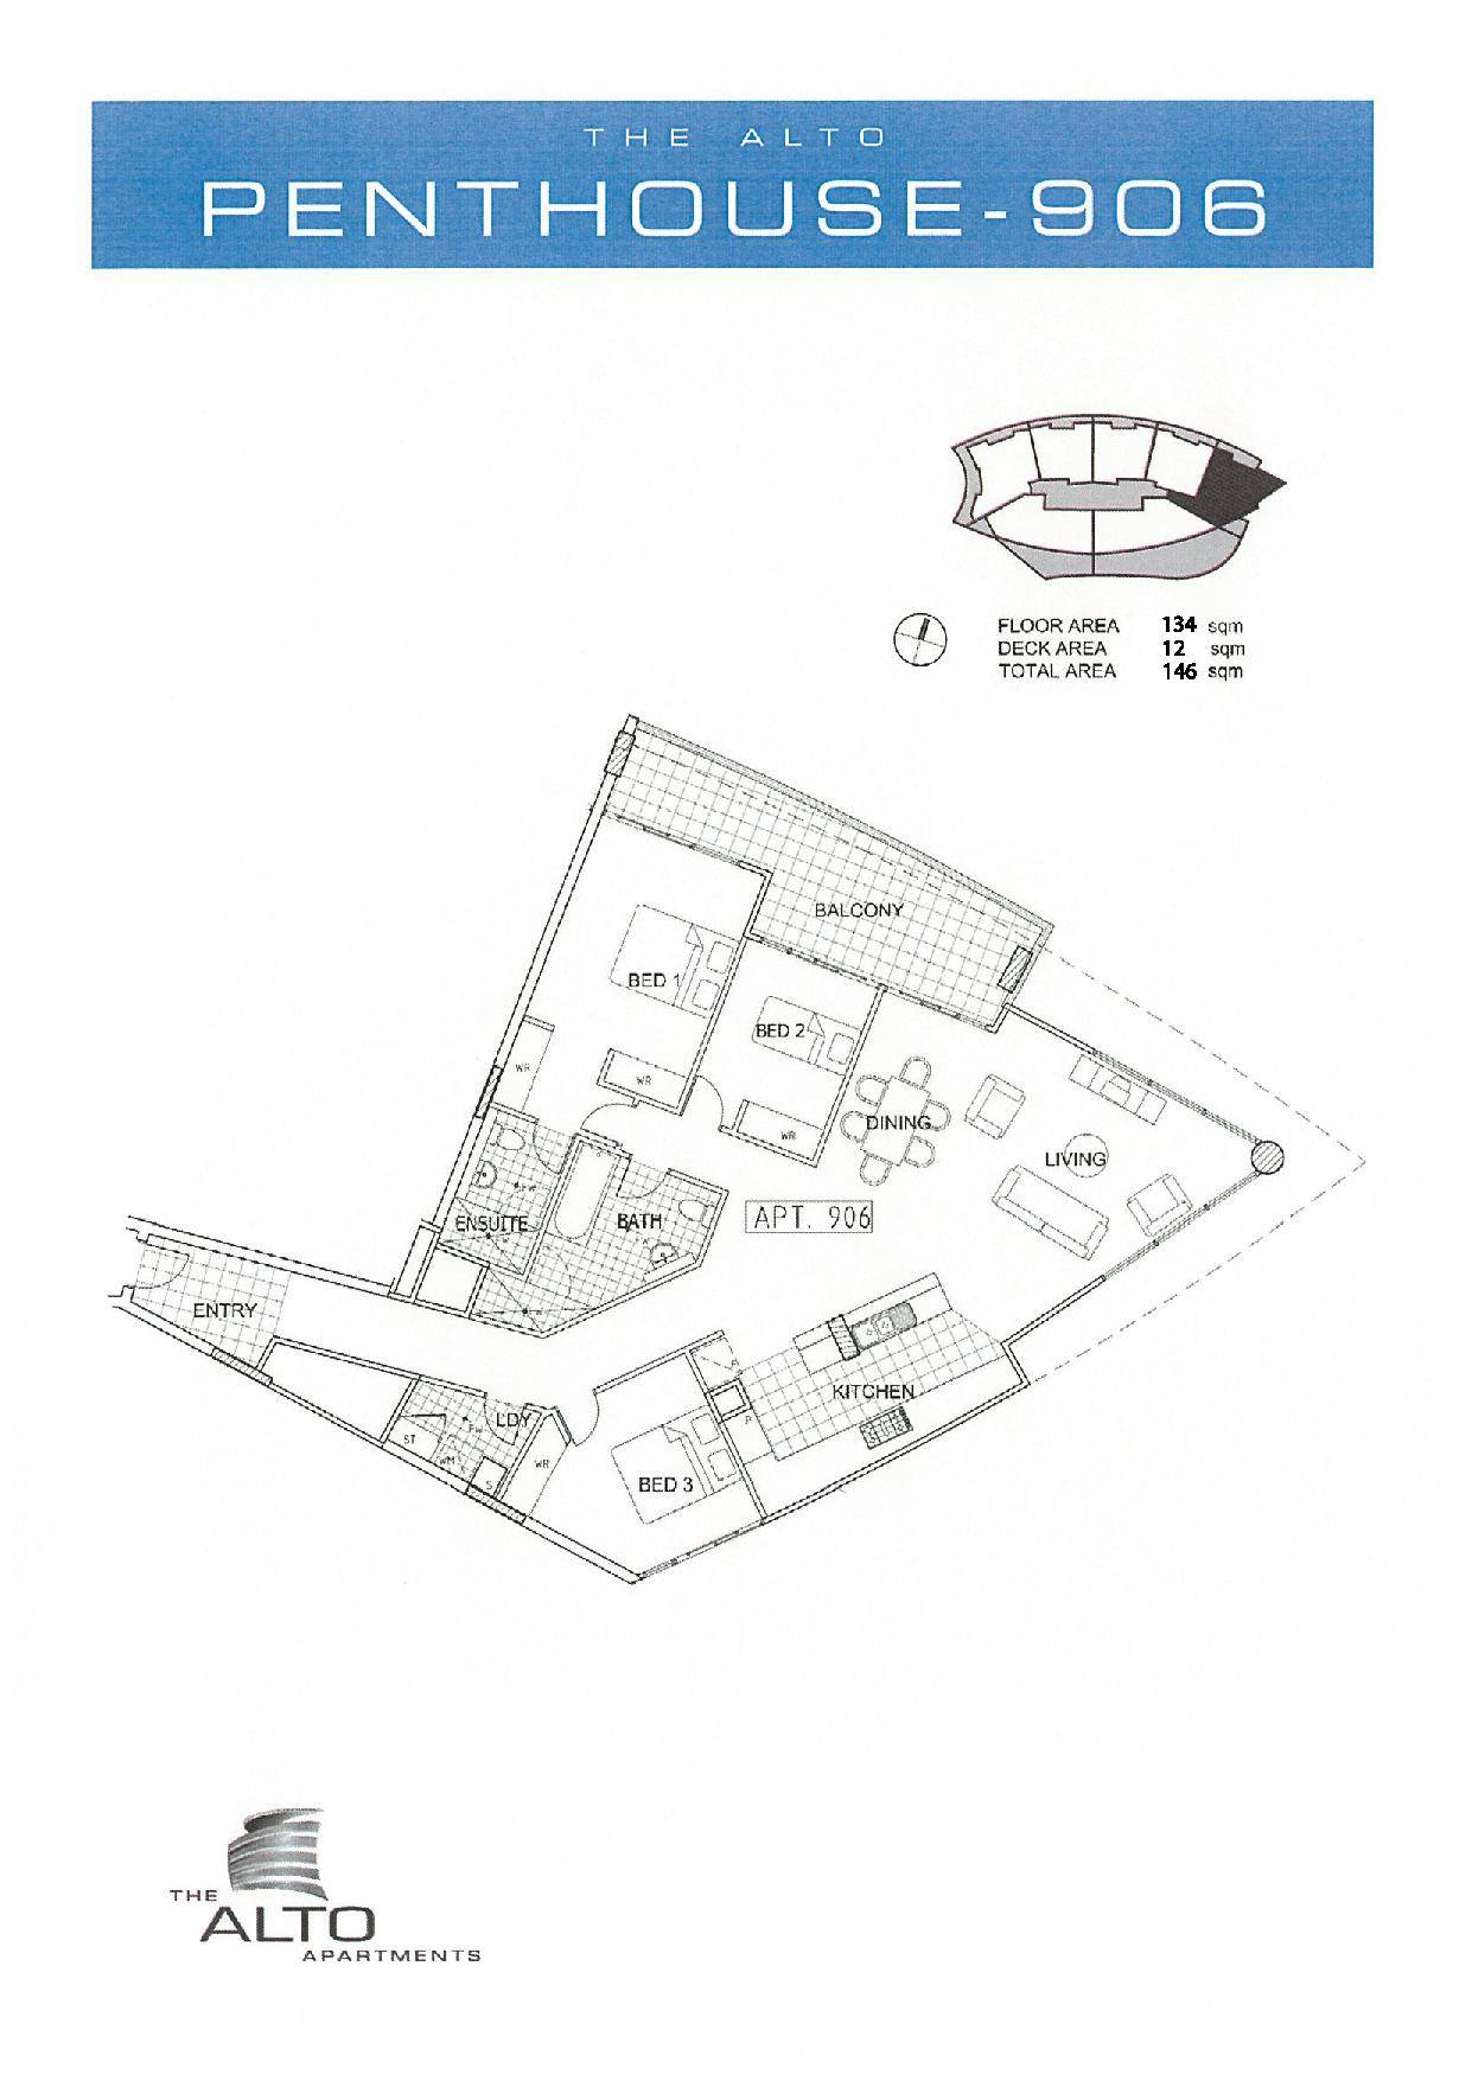 Floorplan of Homely apartment listing, 906/316 Charlestown Road, Charlestown NSW 2290